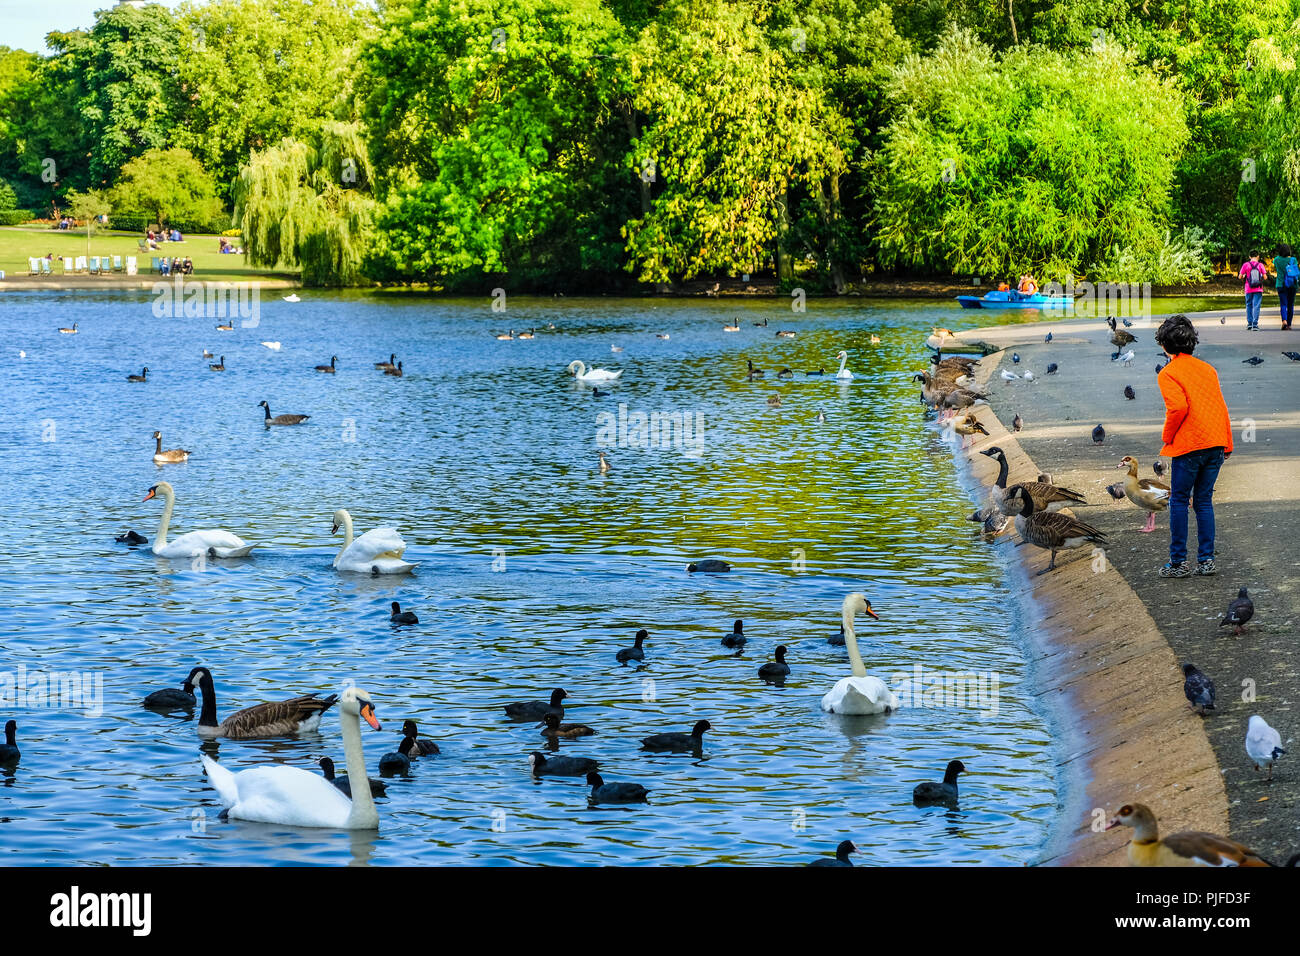 Boy in bright orange jacket feeding birds swimming in a pond in Regent's Park, London, England Stock Photo